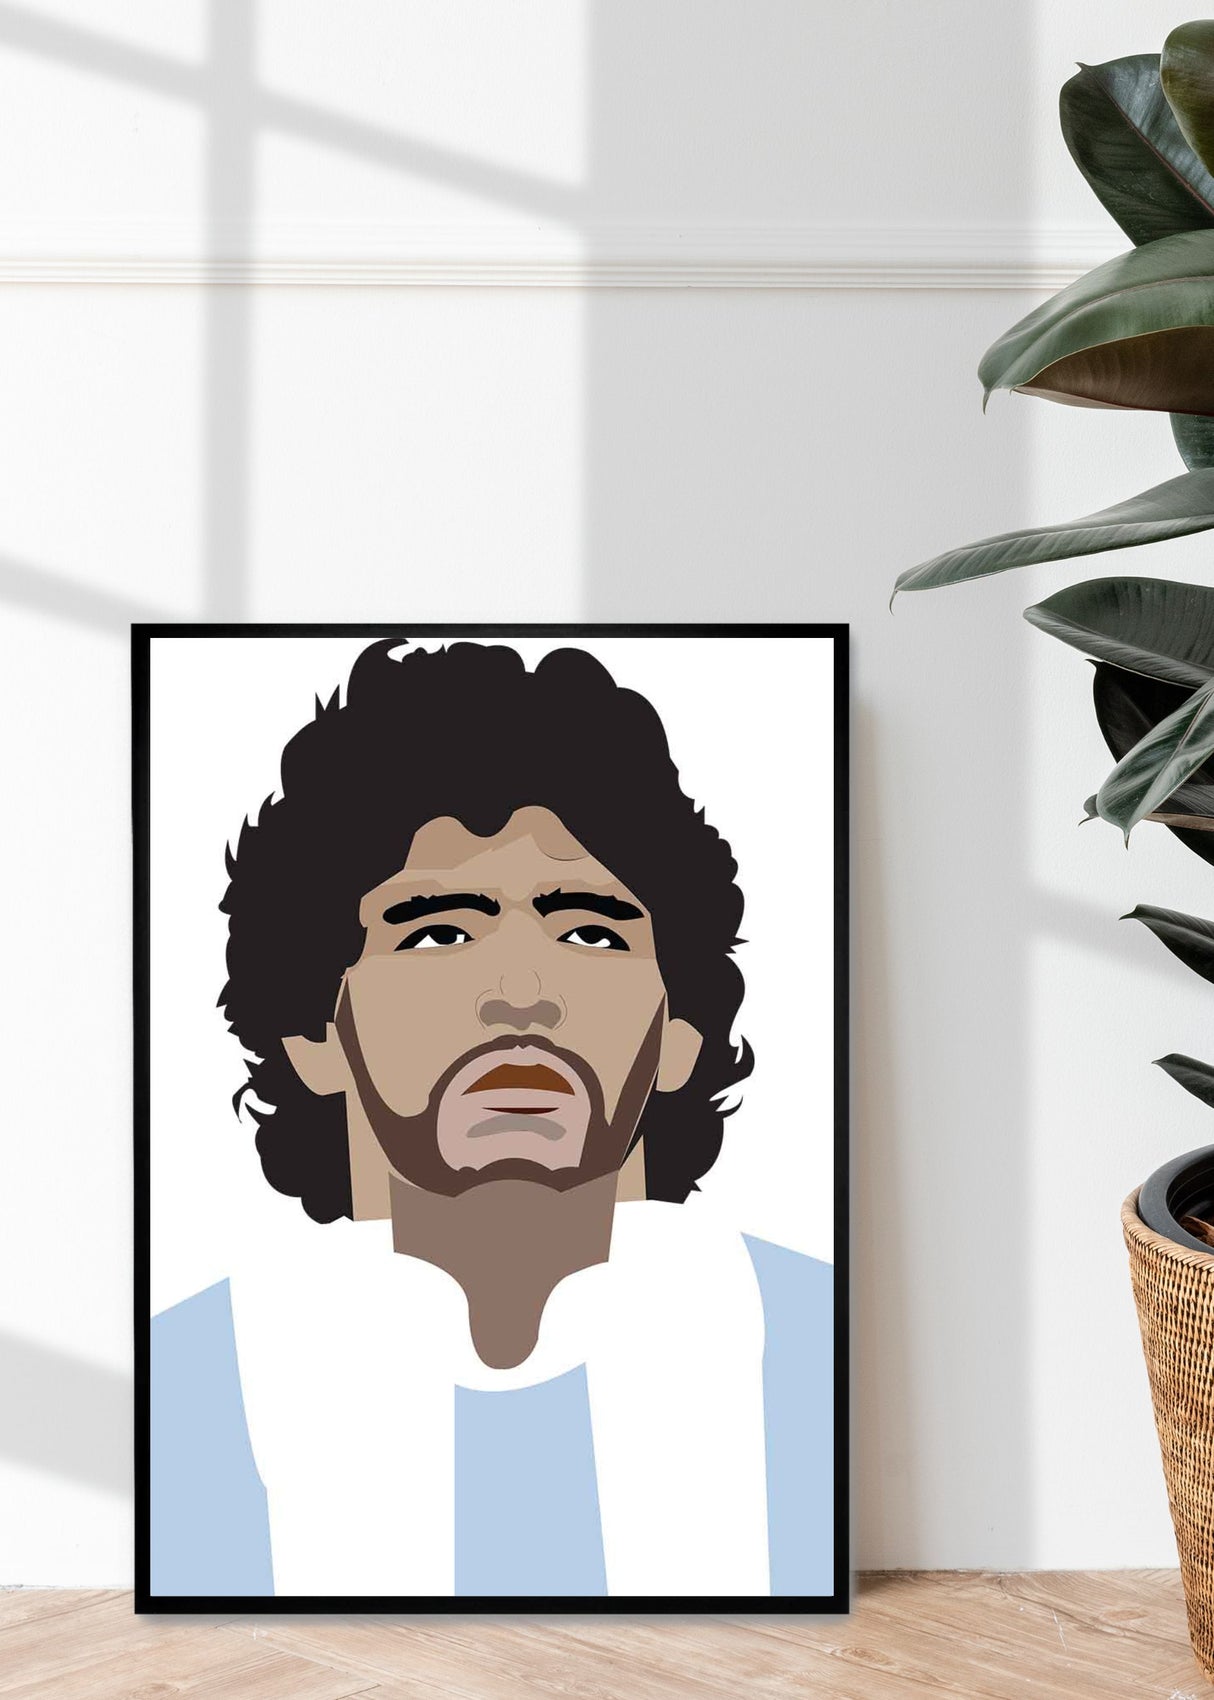 Diego Maradona poster